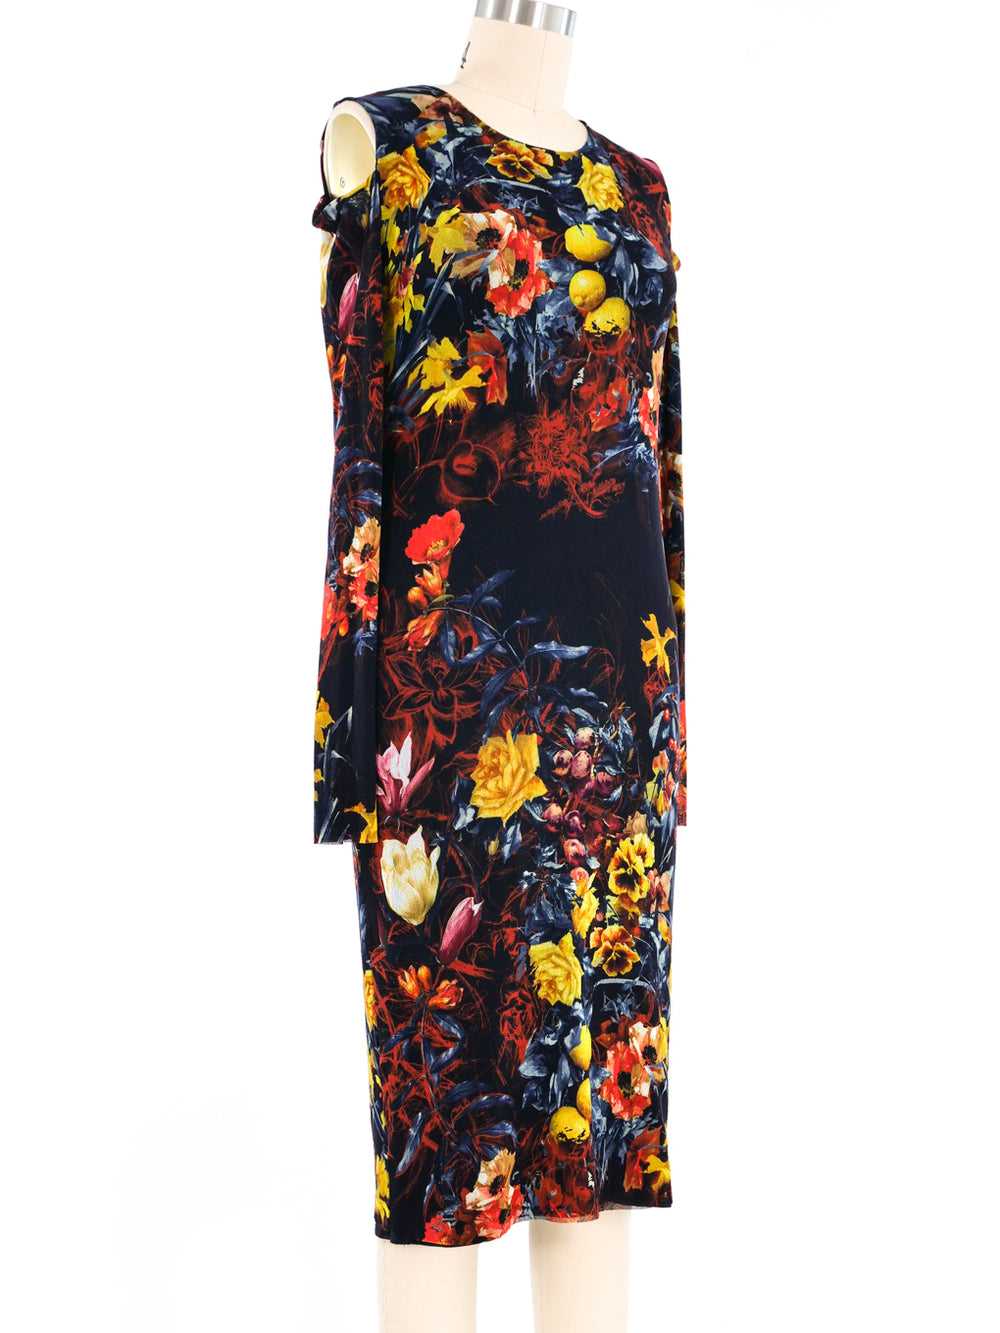 Jean Paul Gaultier Rose Printed Mesh Dress - image 3